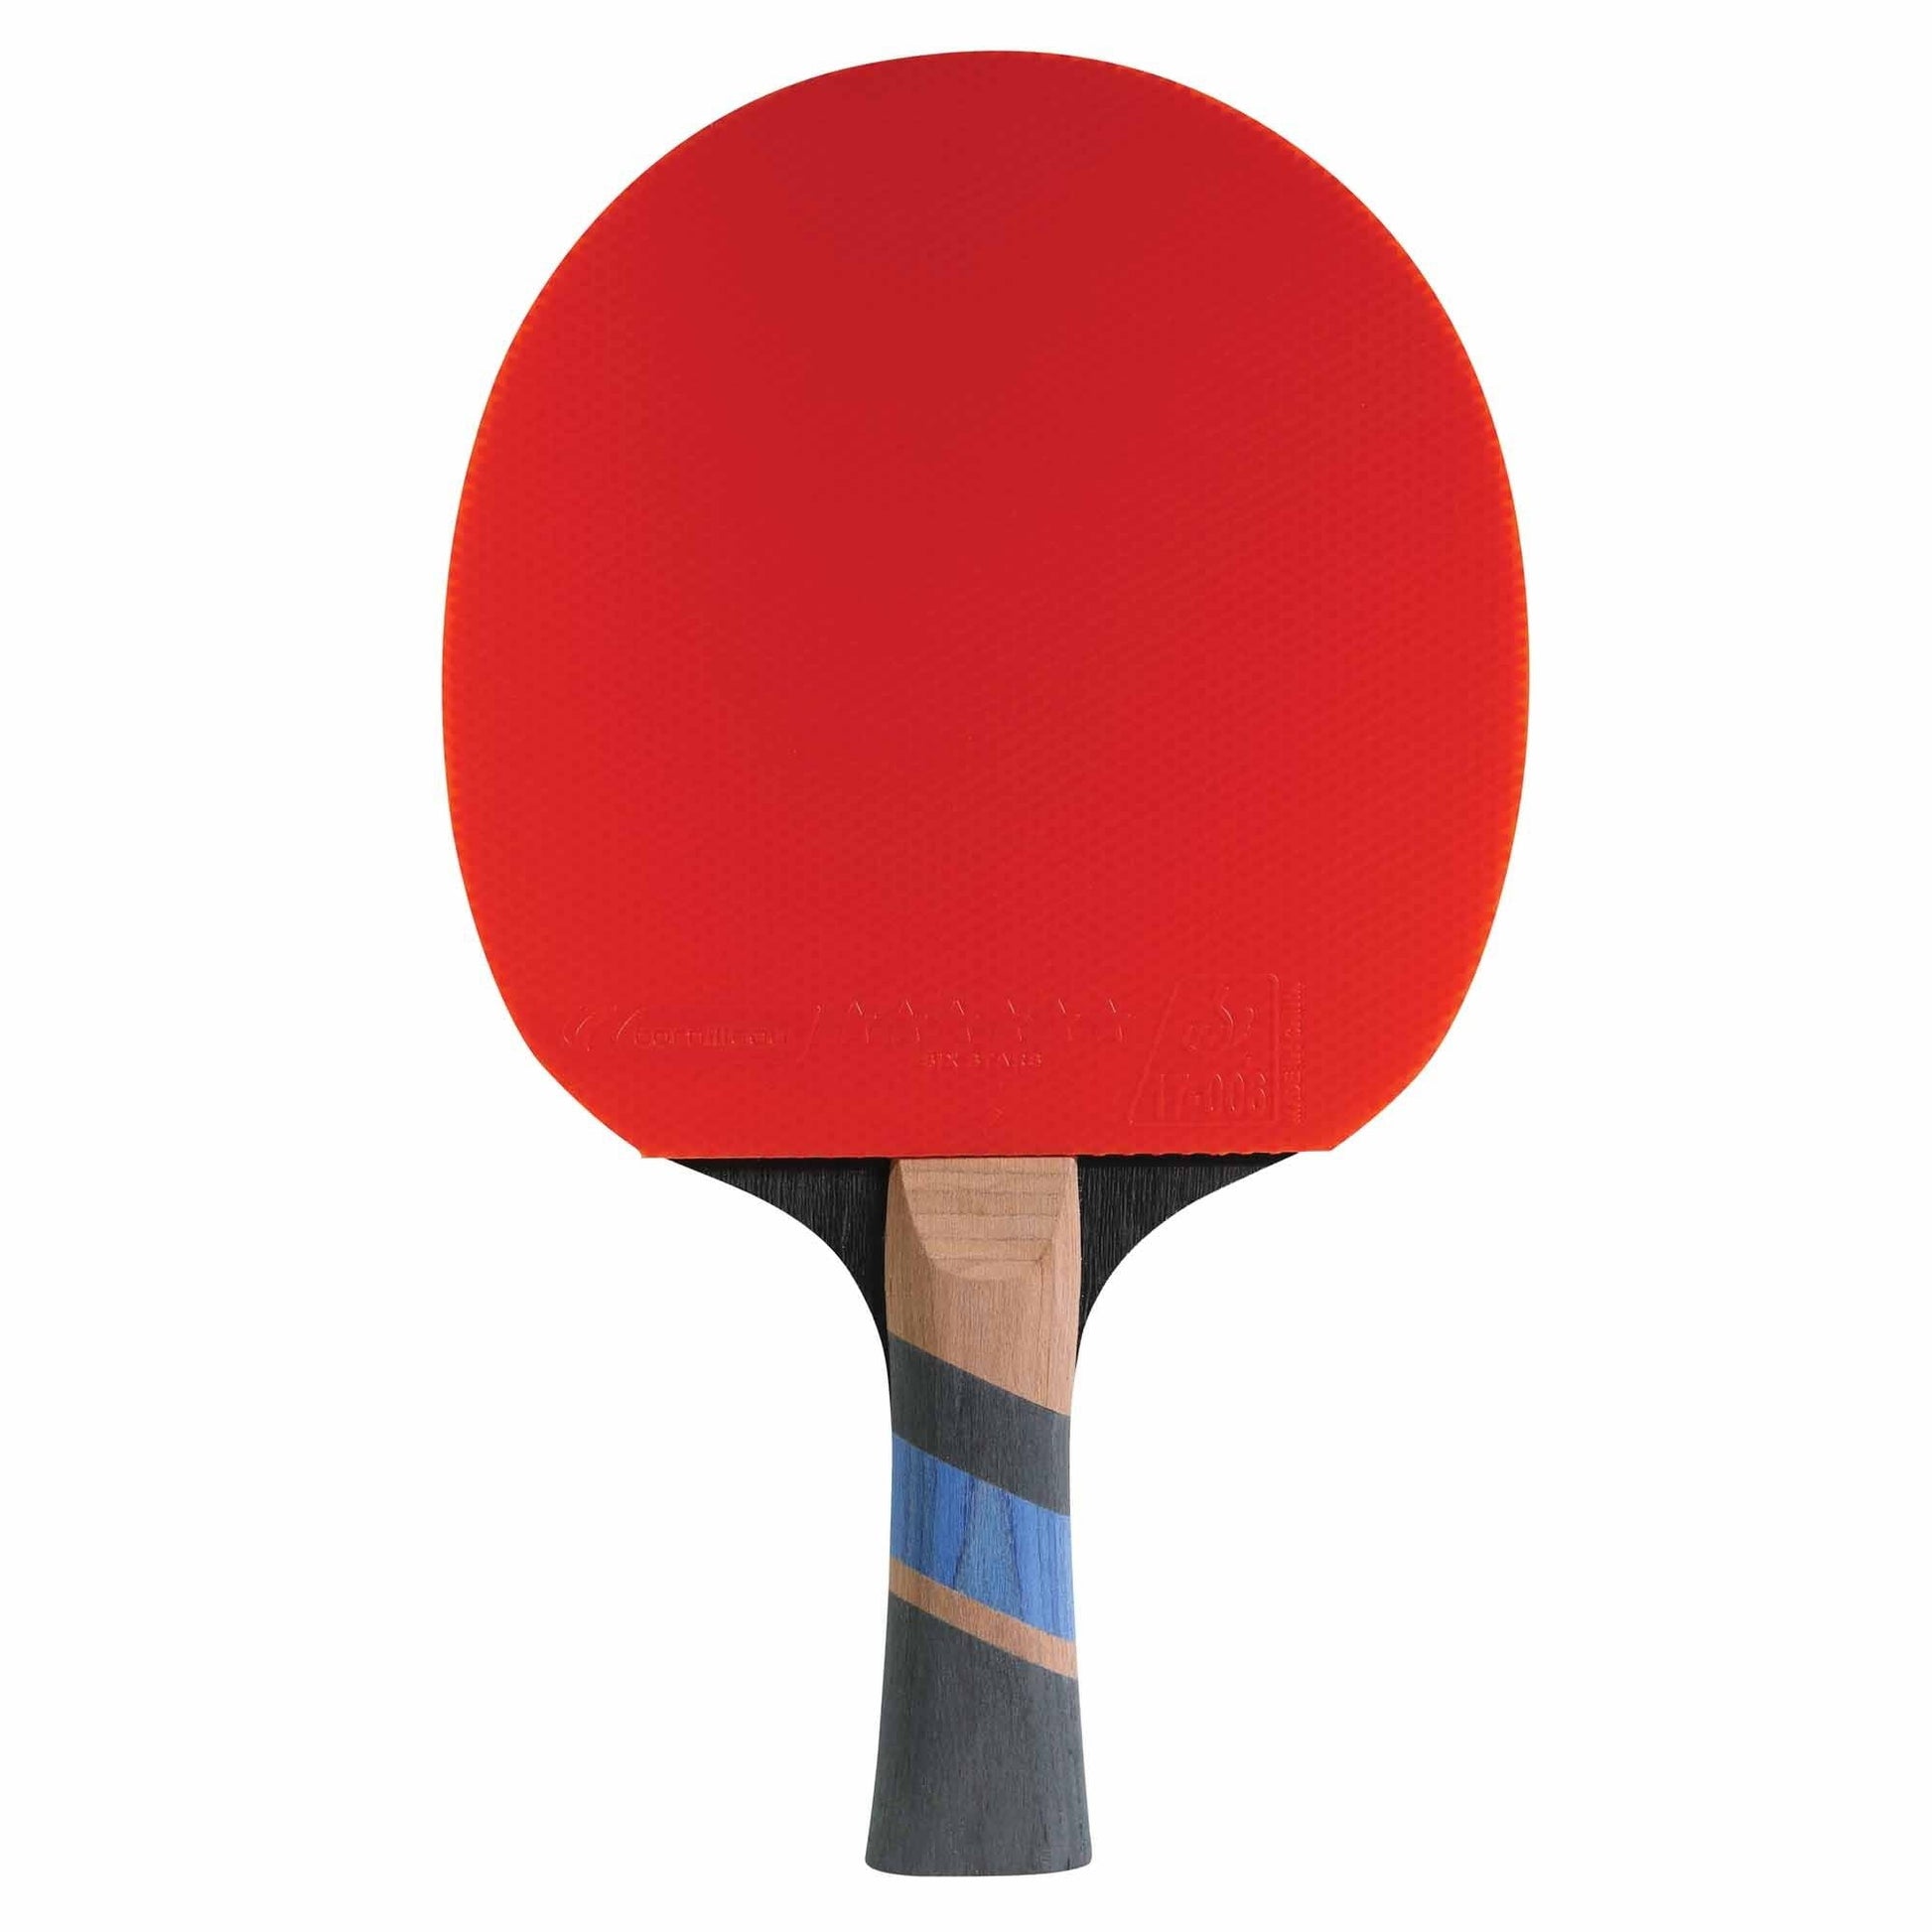 Cornilleau Excell 1000 Table Tennis Bat